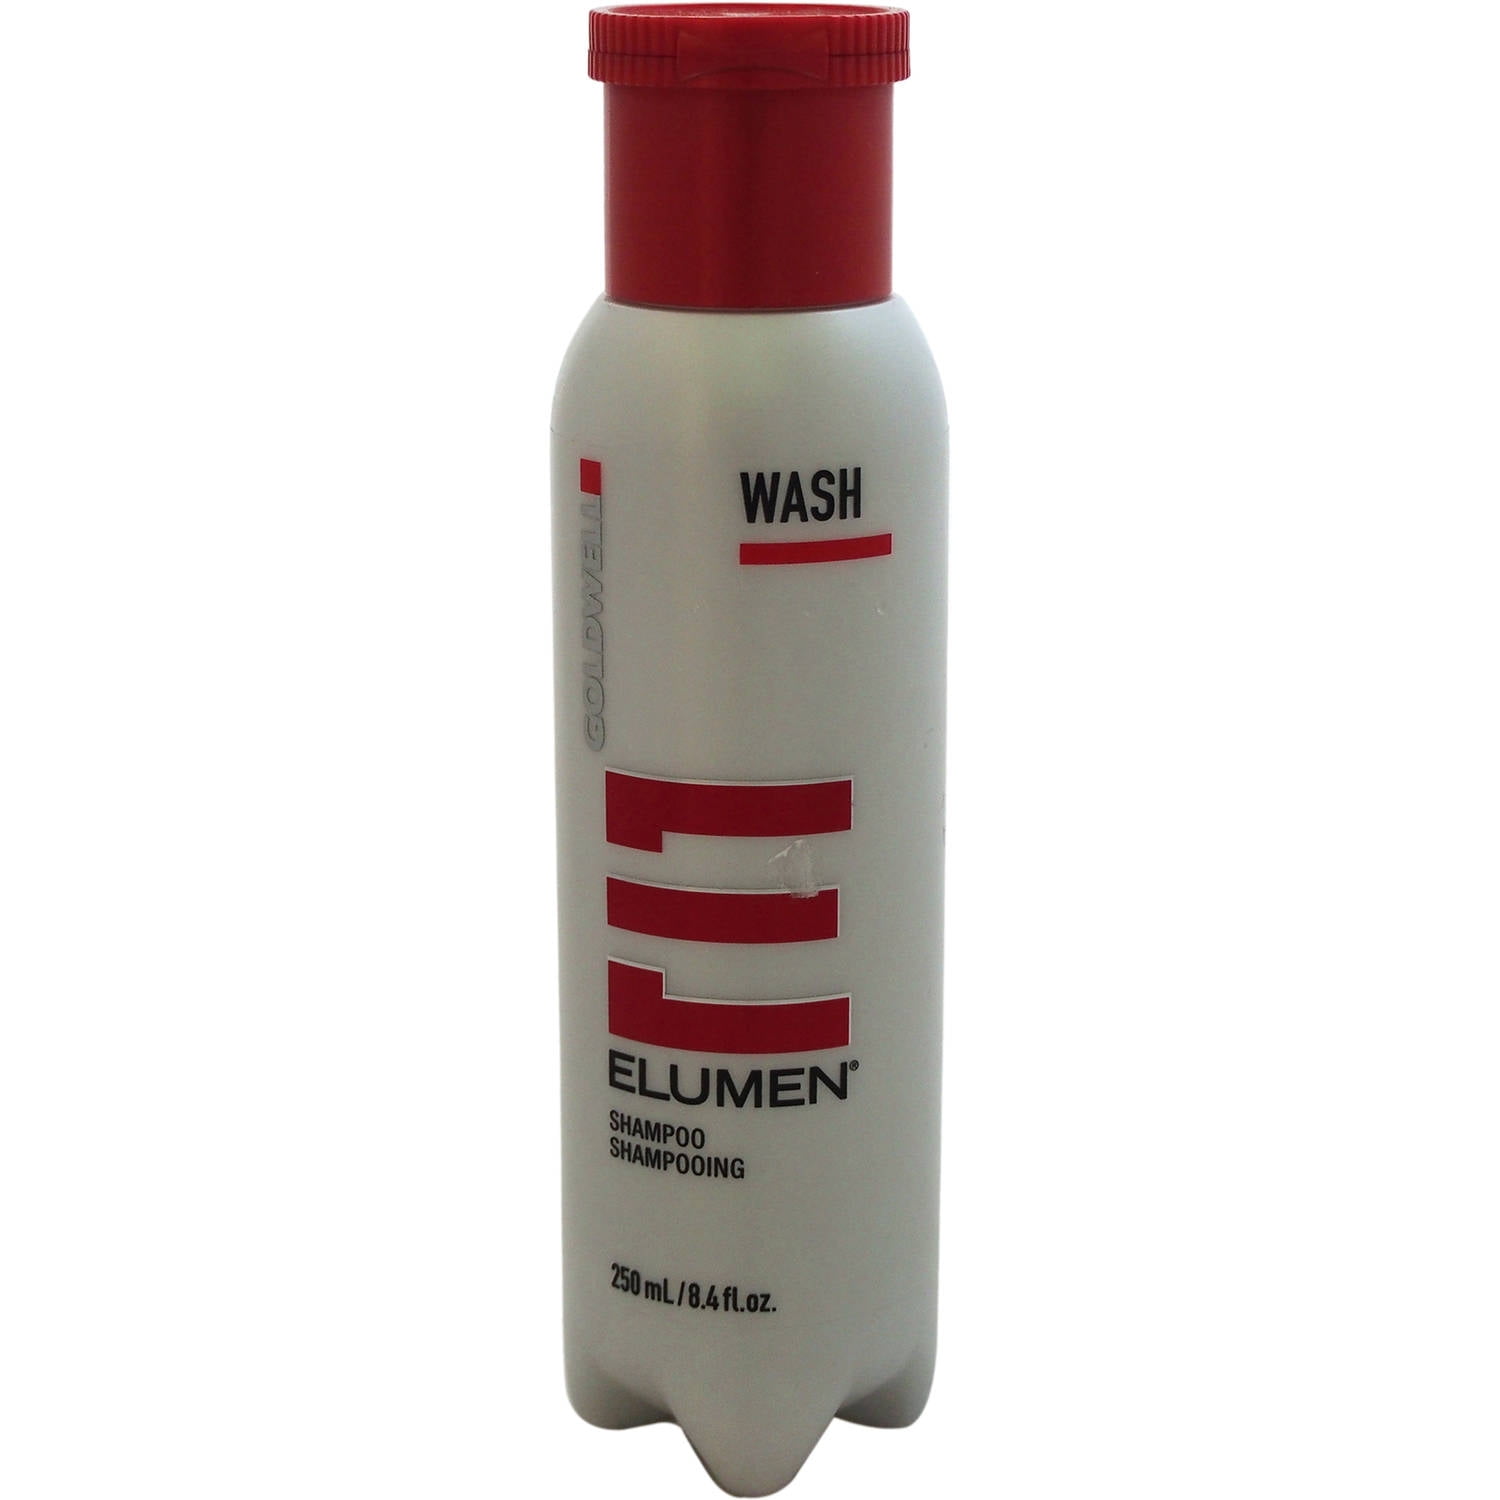 Elumen Wash For Colored Hair, 8.4 fl oz - Walmart.com